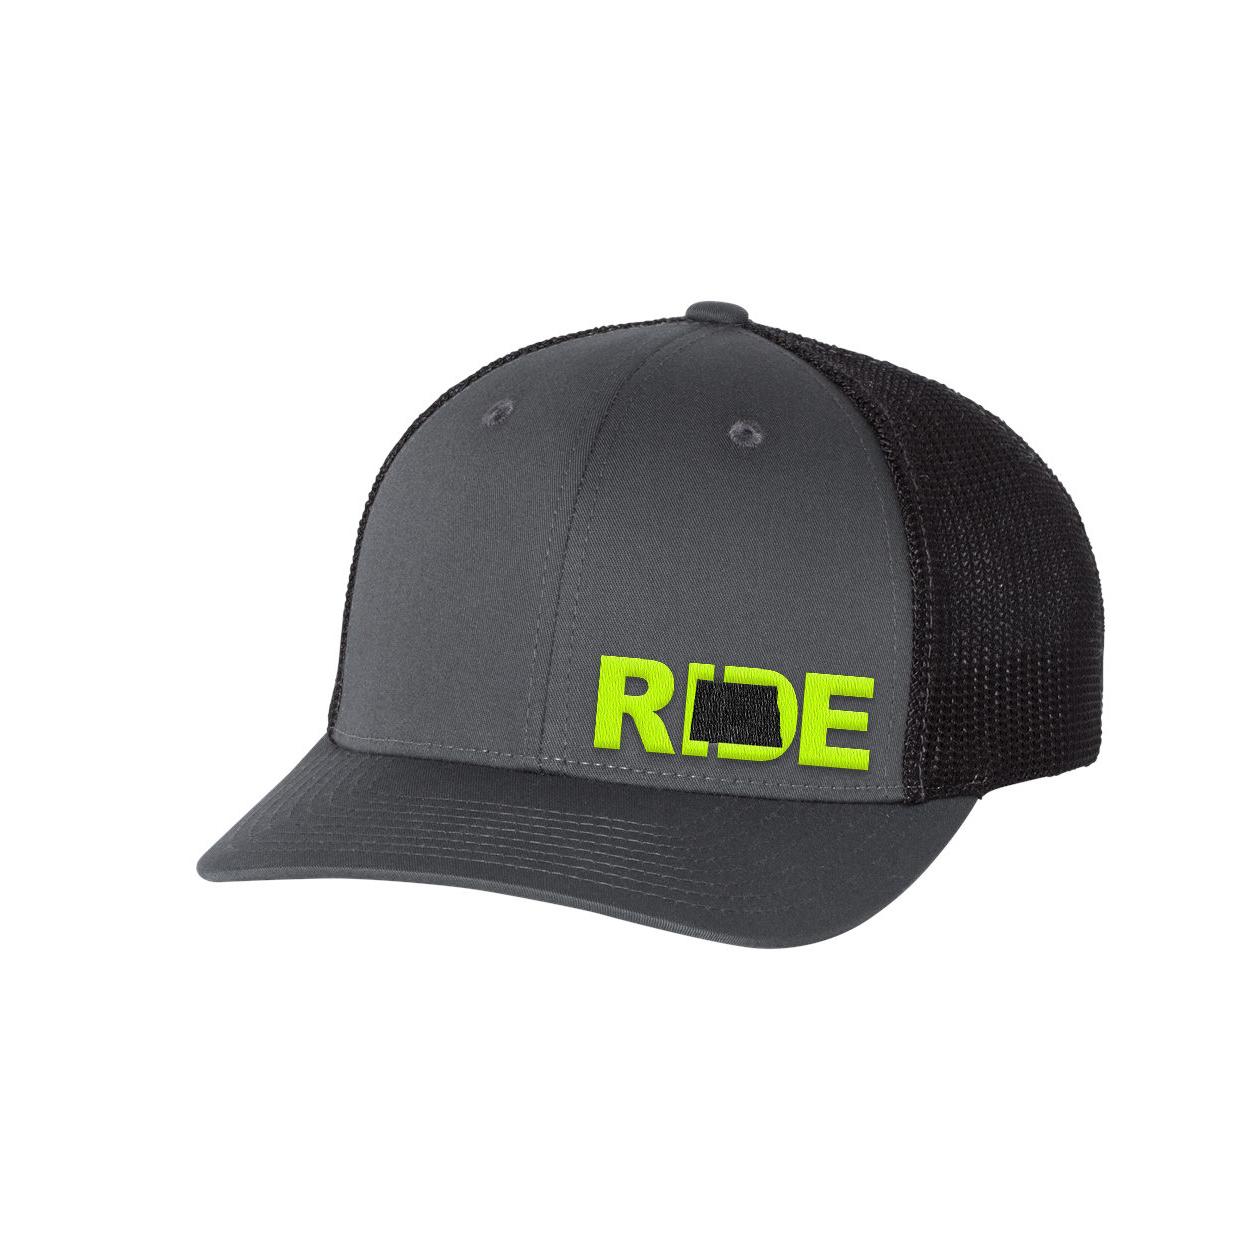 Ride North Dakota Night Out Embroidered Snapback Trucker Hat Gray/Black/Hi-Vis